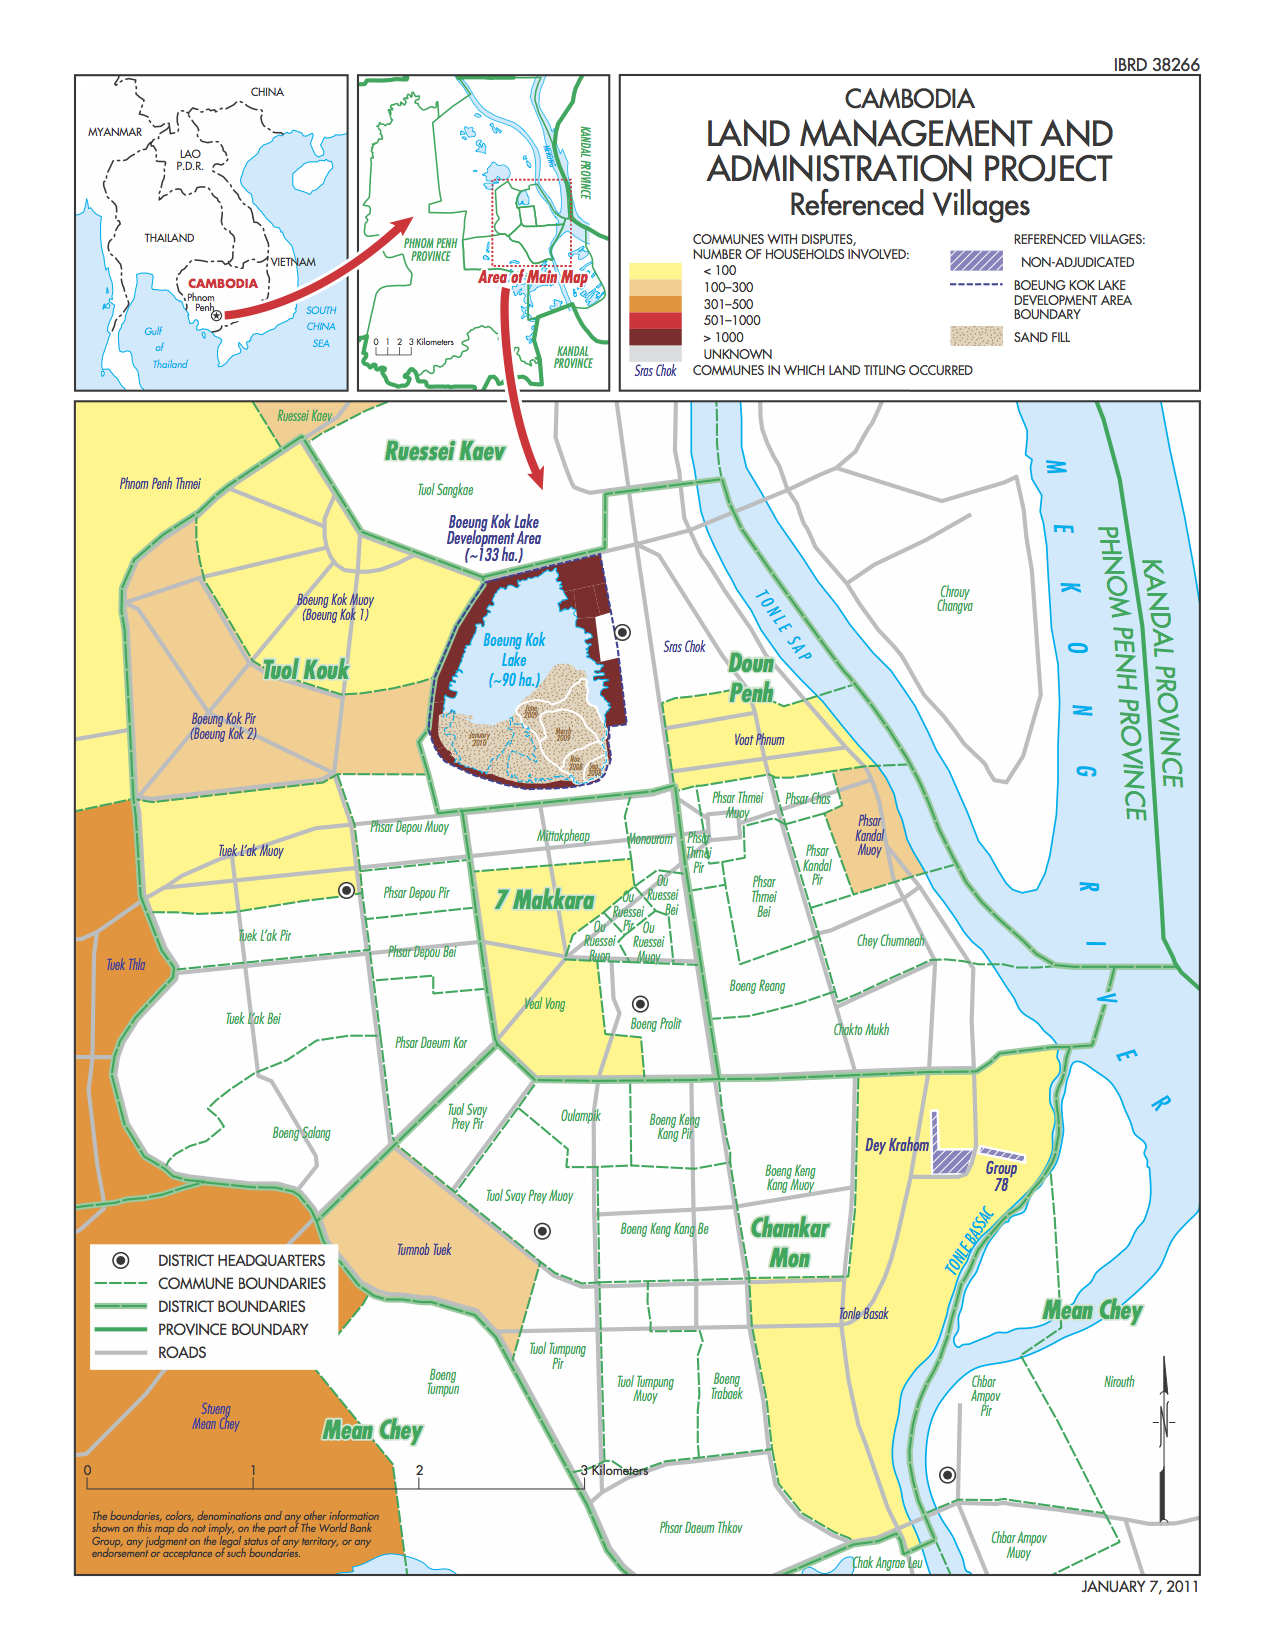 https://cityofwater.files.wordpress.com/2012/07/phnom-penh-titled-areas.png